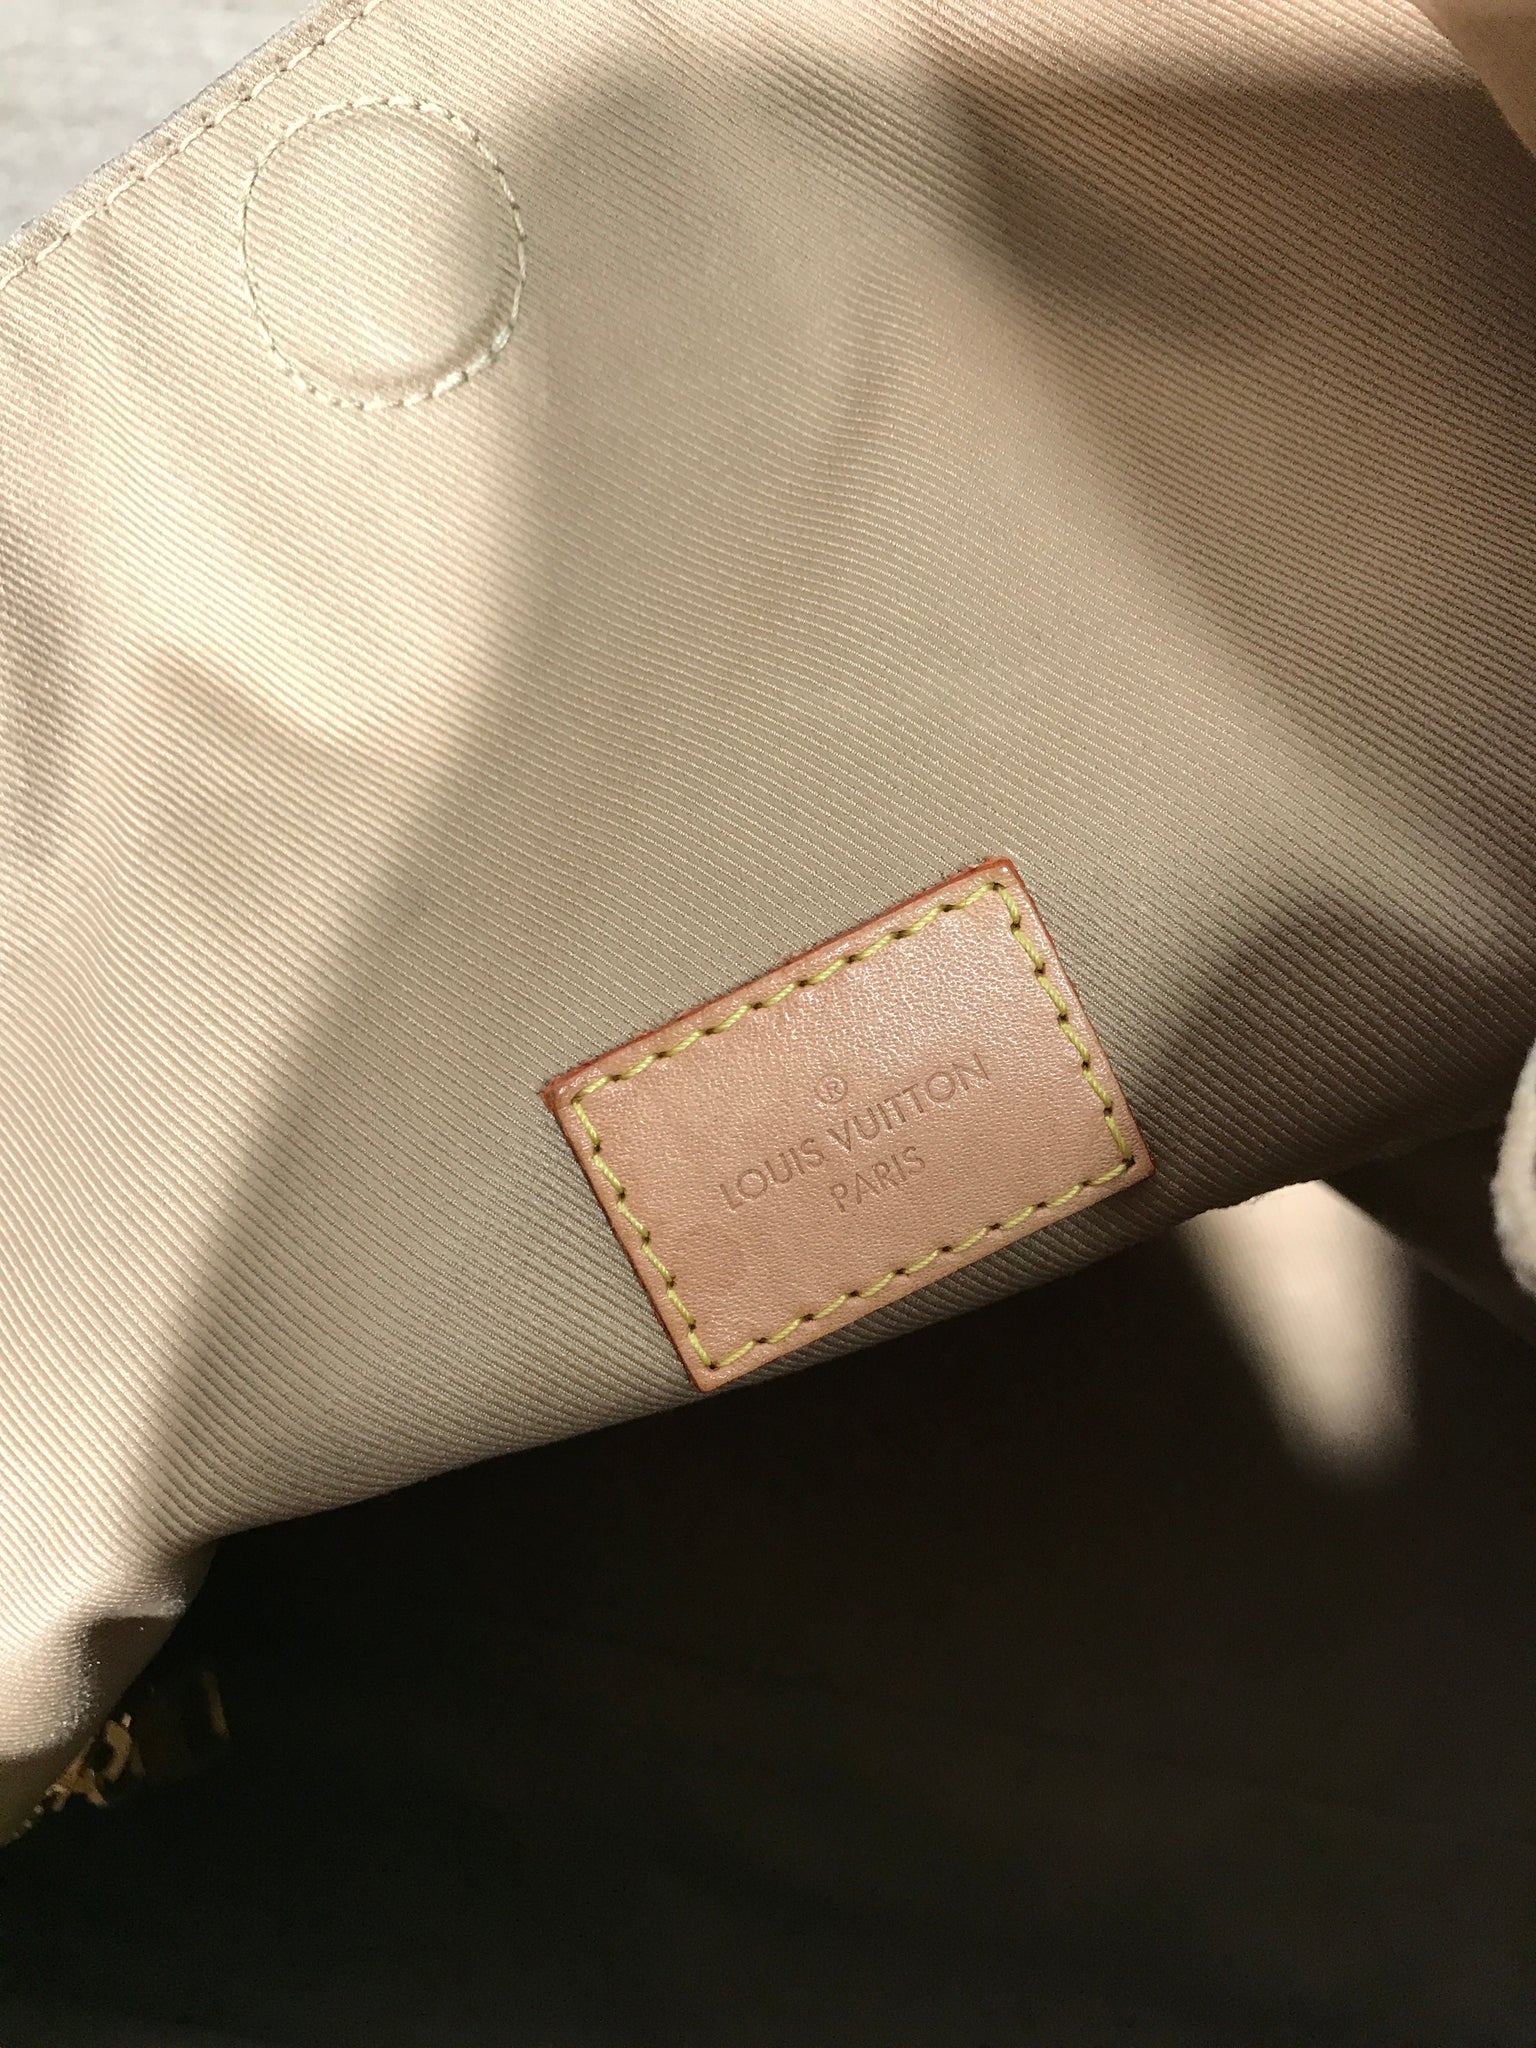 At Auction: Louis Vuitton, Louis Vuitton Graceful Handbag Luggage Tag MM